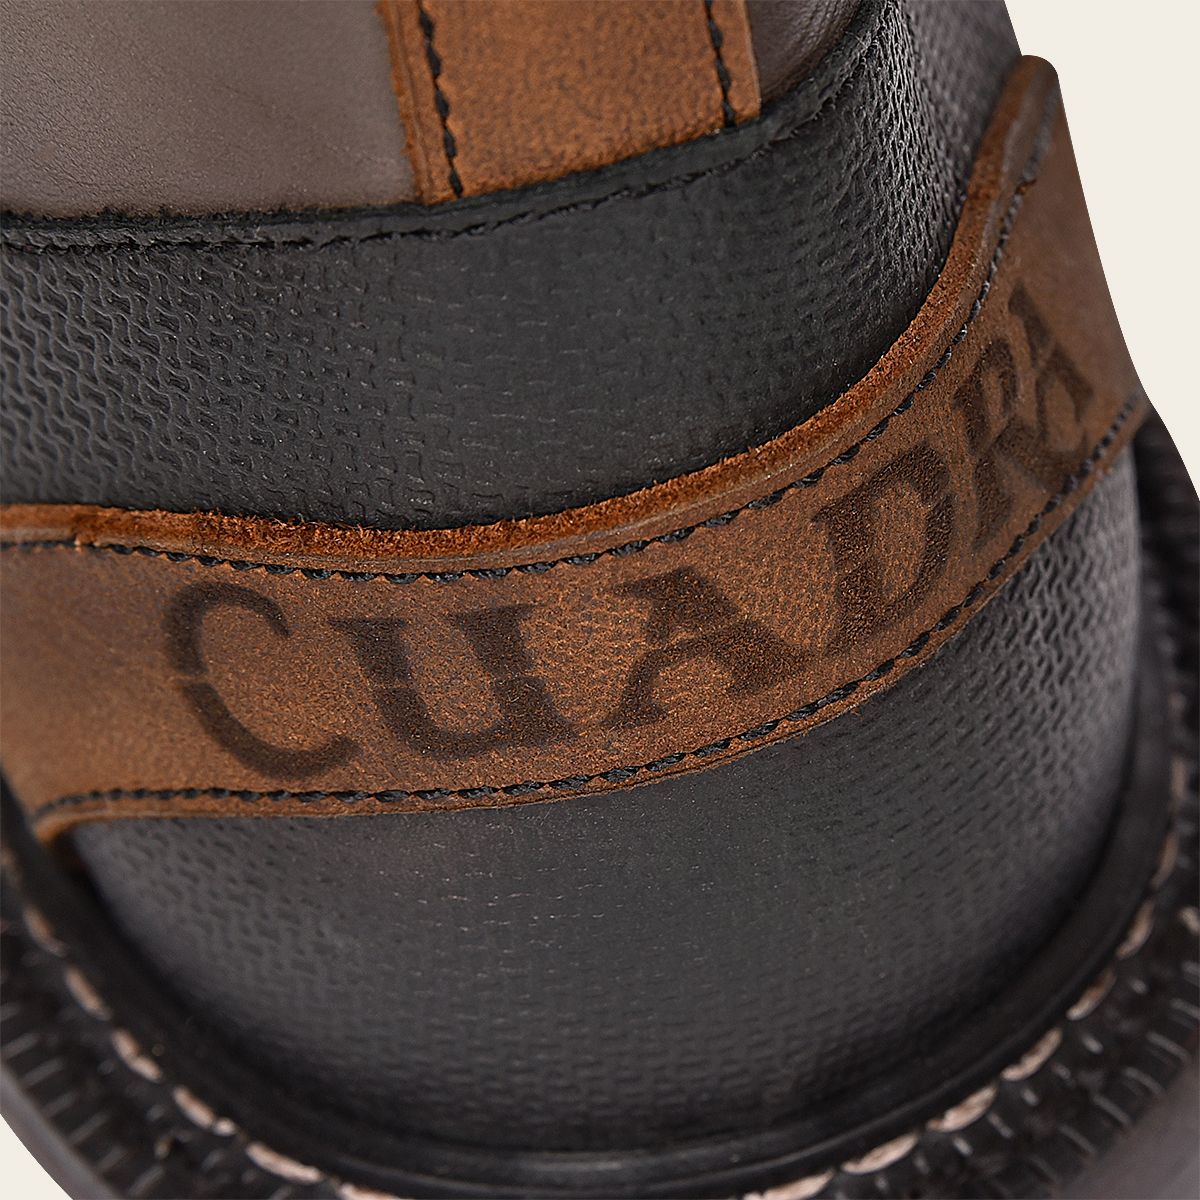 1J2ORS - Cuadra brown casual fashion cowhide boots for men.-CUADRA-Kuet-Cuadra-Boots